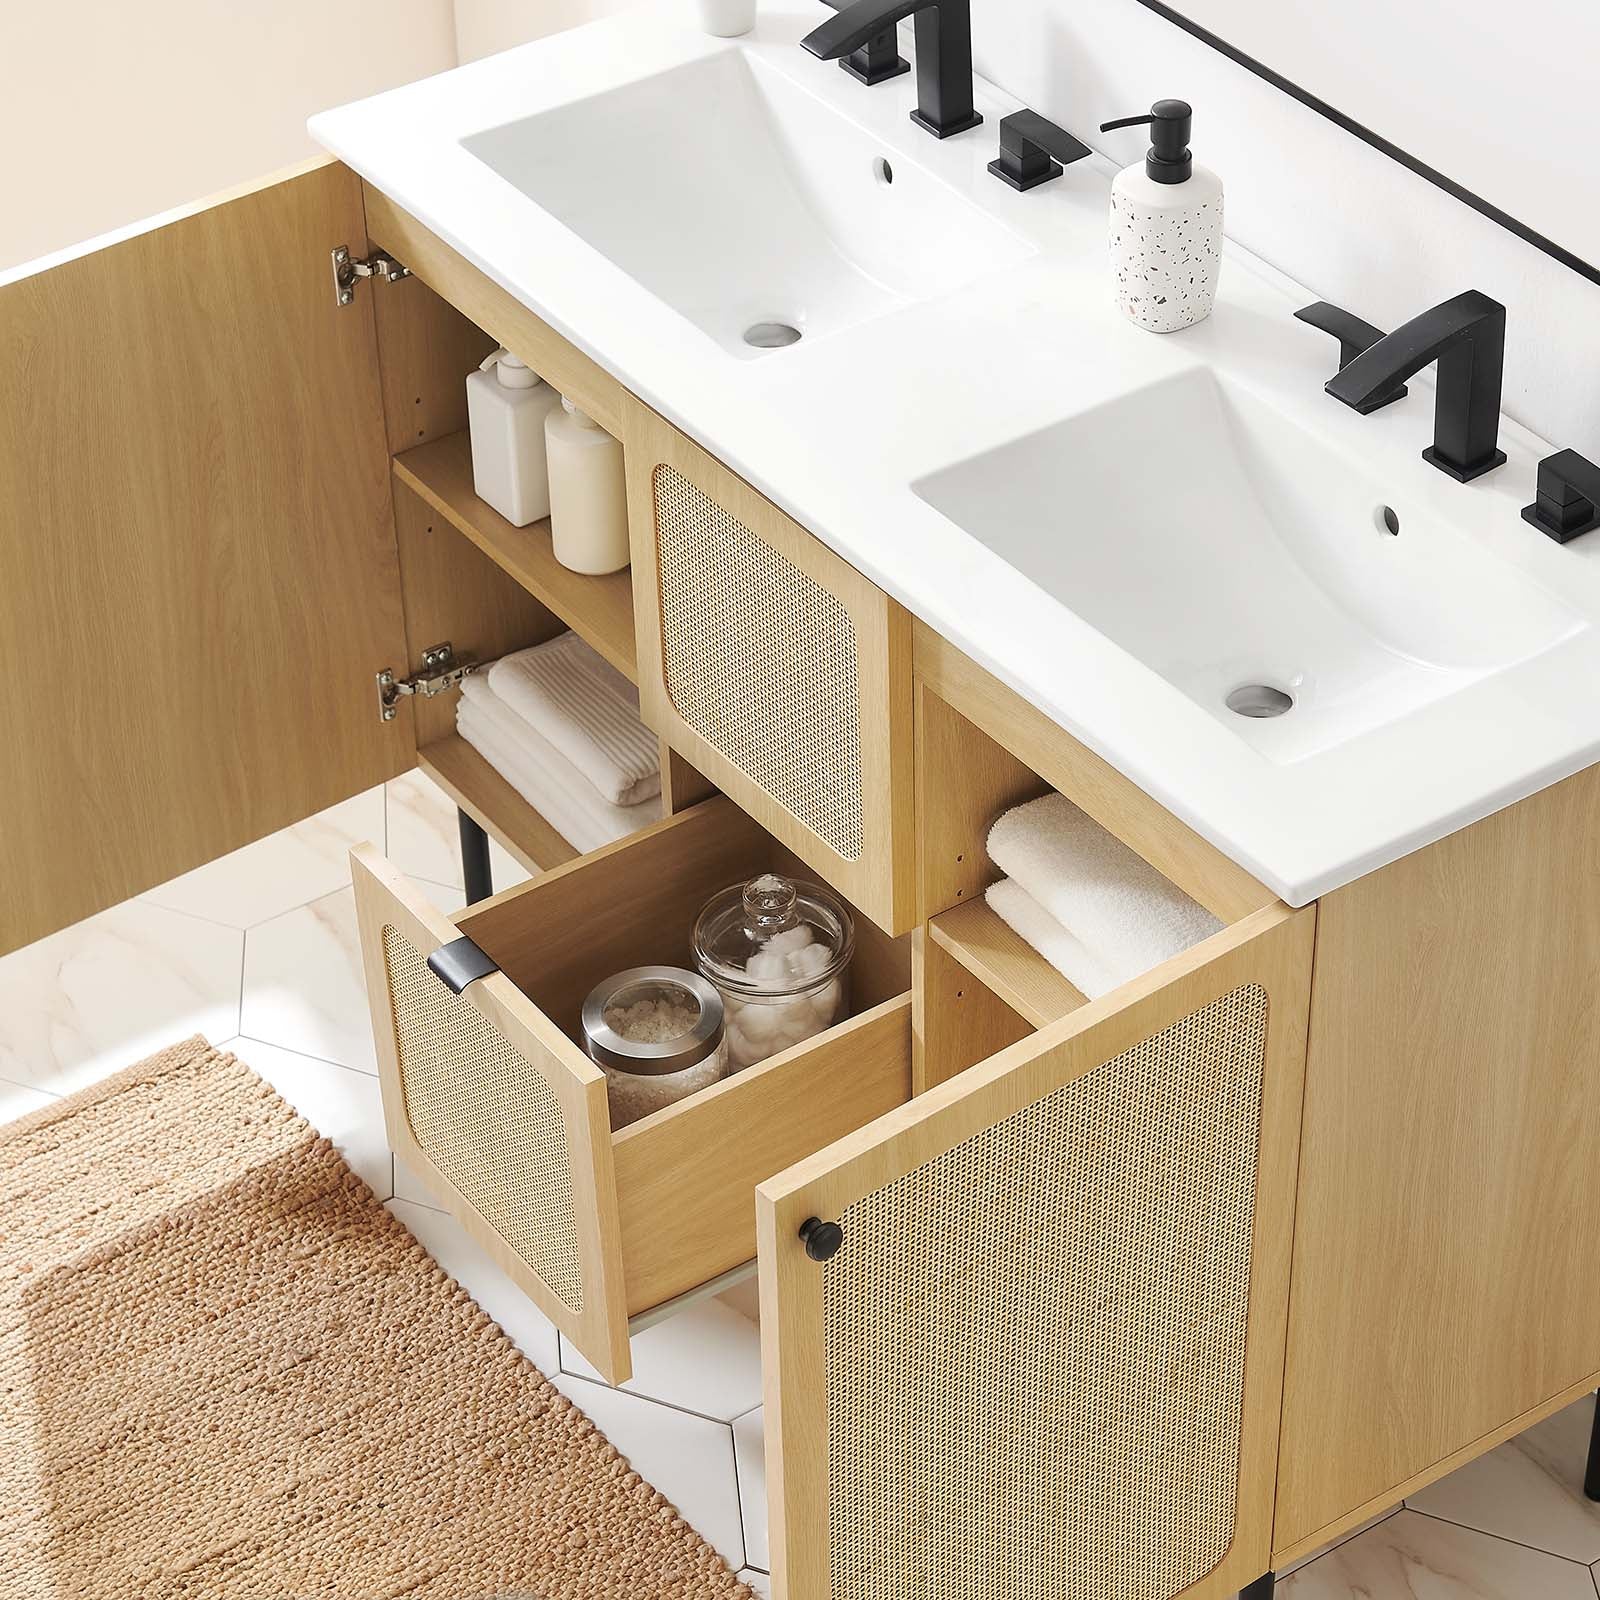 Chaucer 48" Double Sink Bathroom Vanity - East Shore Modern Home Furnishings